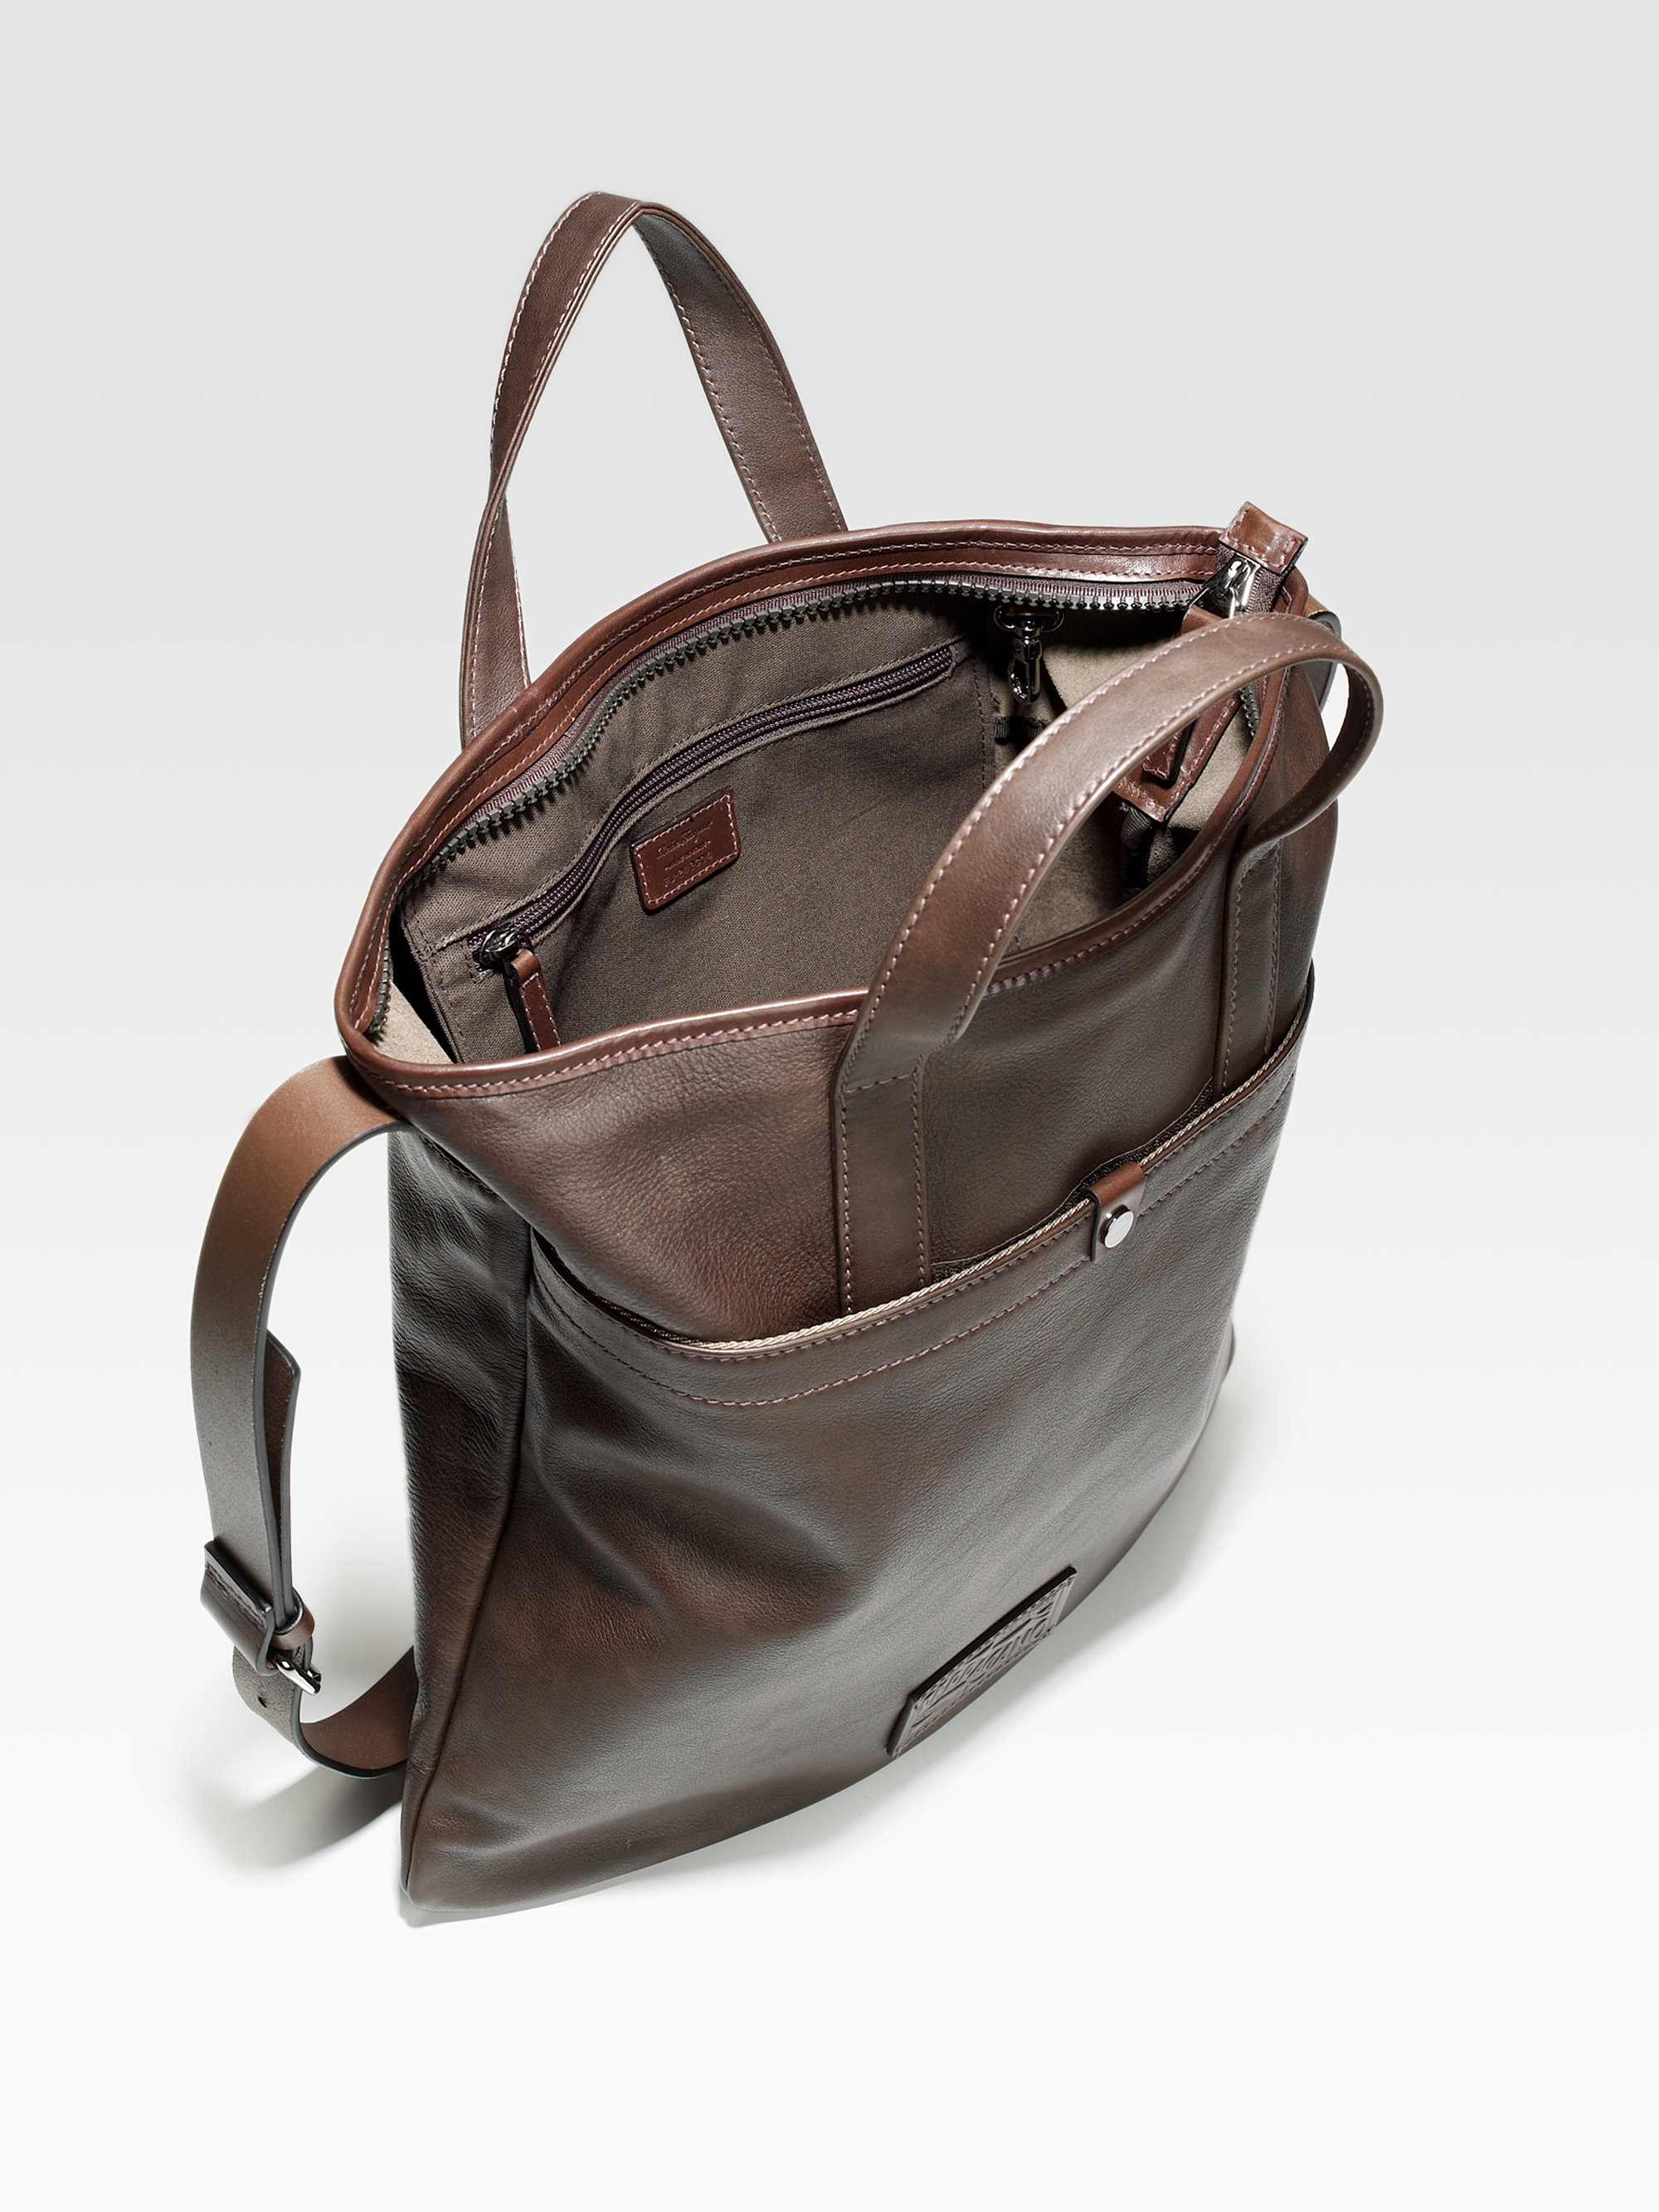 Lyst Ferragamo Leather Tote Bag in Brown for Men